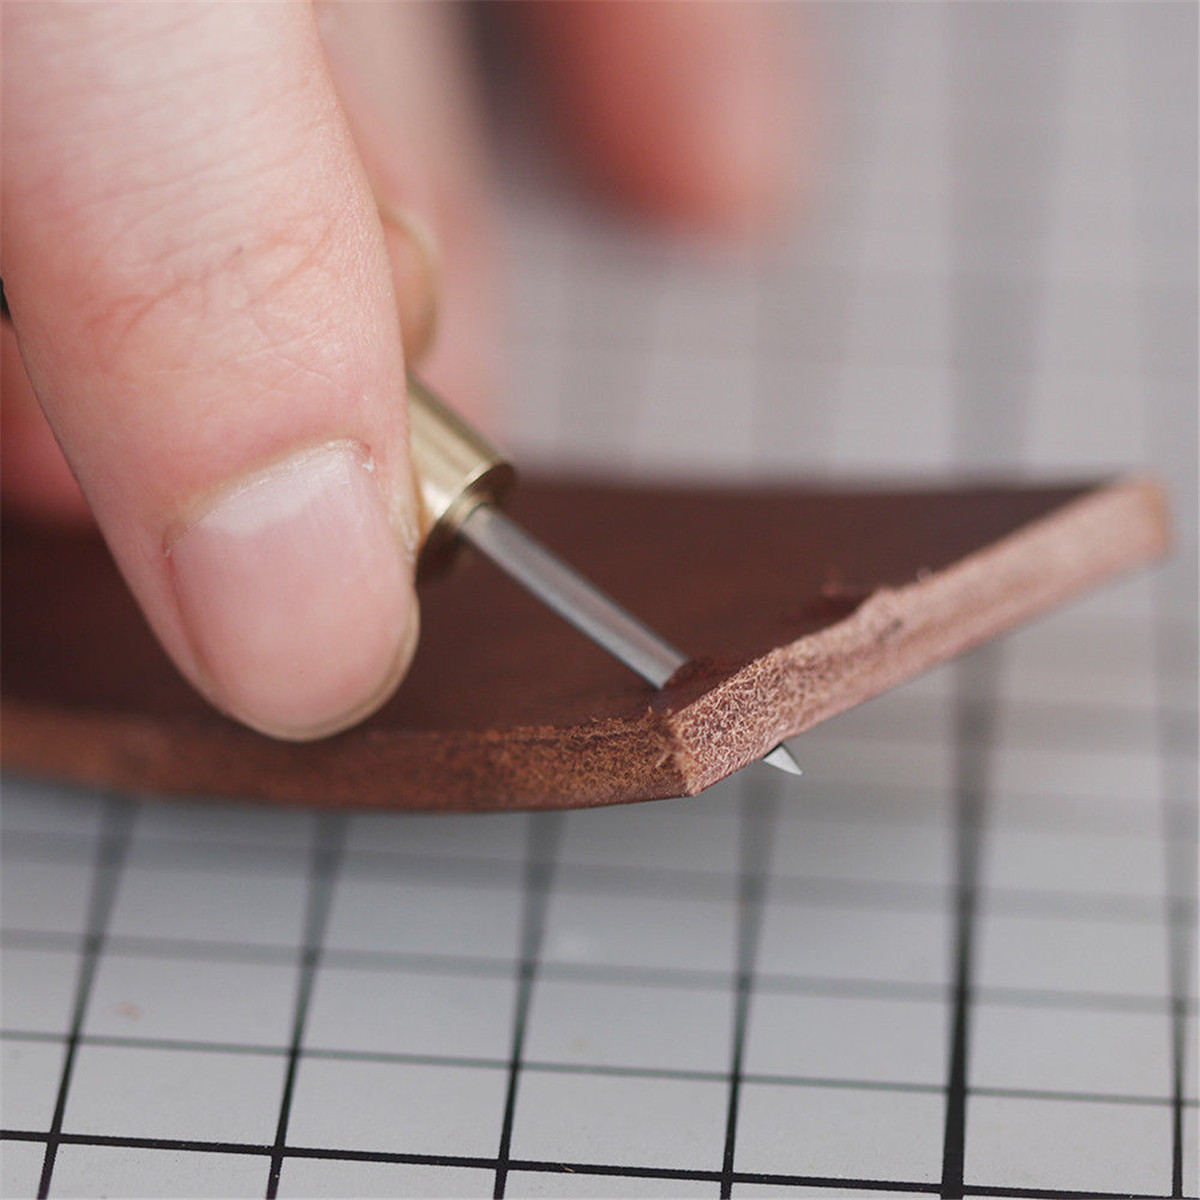 WUTA-Leather-Craft-Tool-Diamond-Stitching-Awl-Ebony-Blackwood-Handle-Leather-Craft-Sewing-Awl-Kit-1292089-3